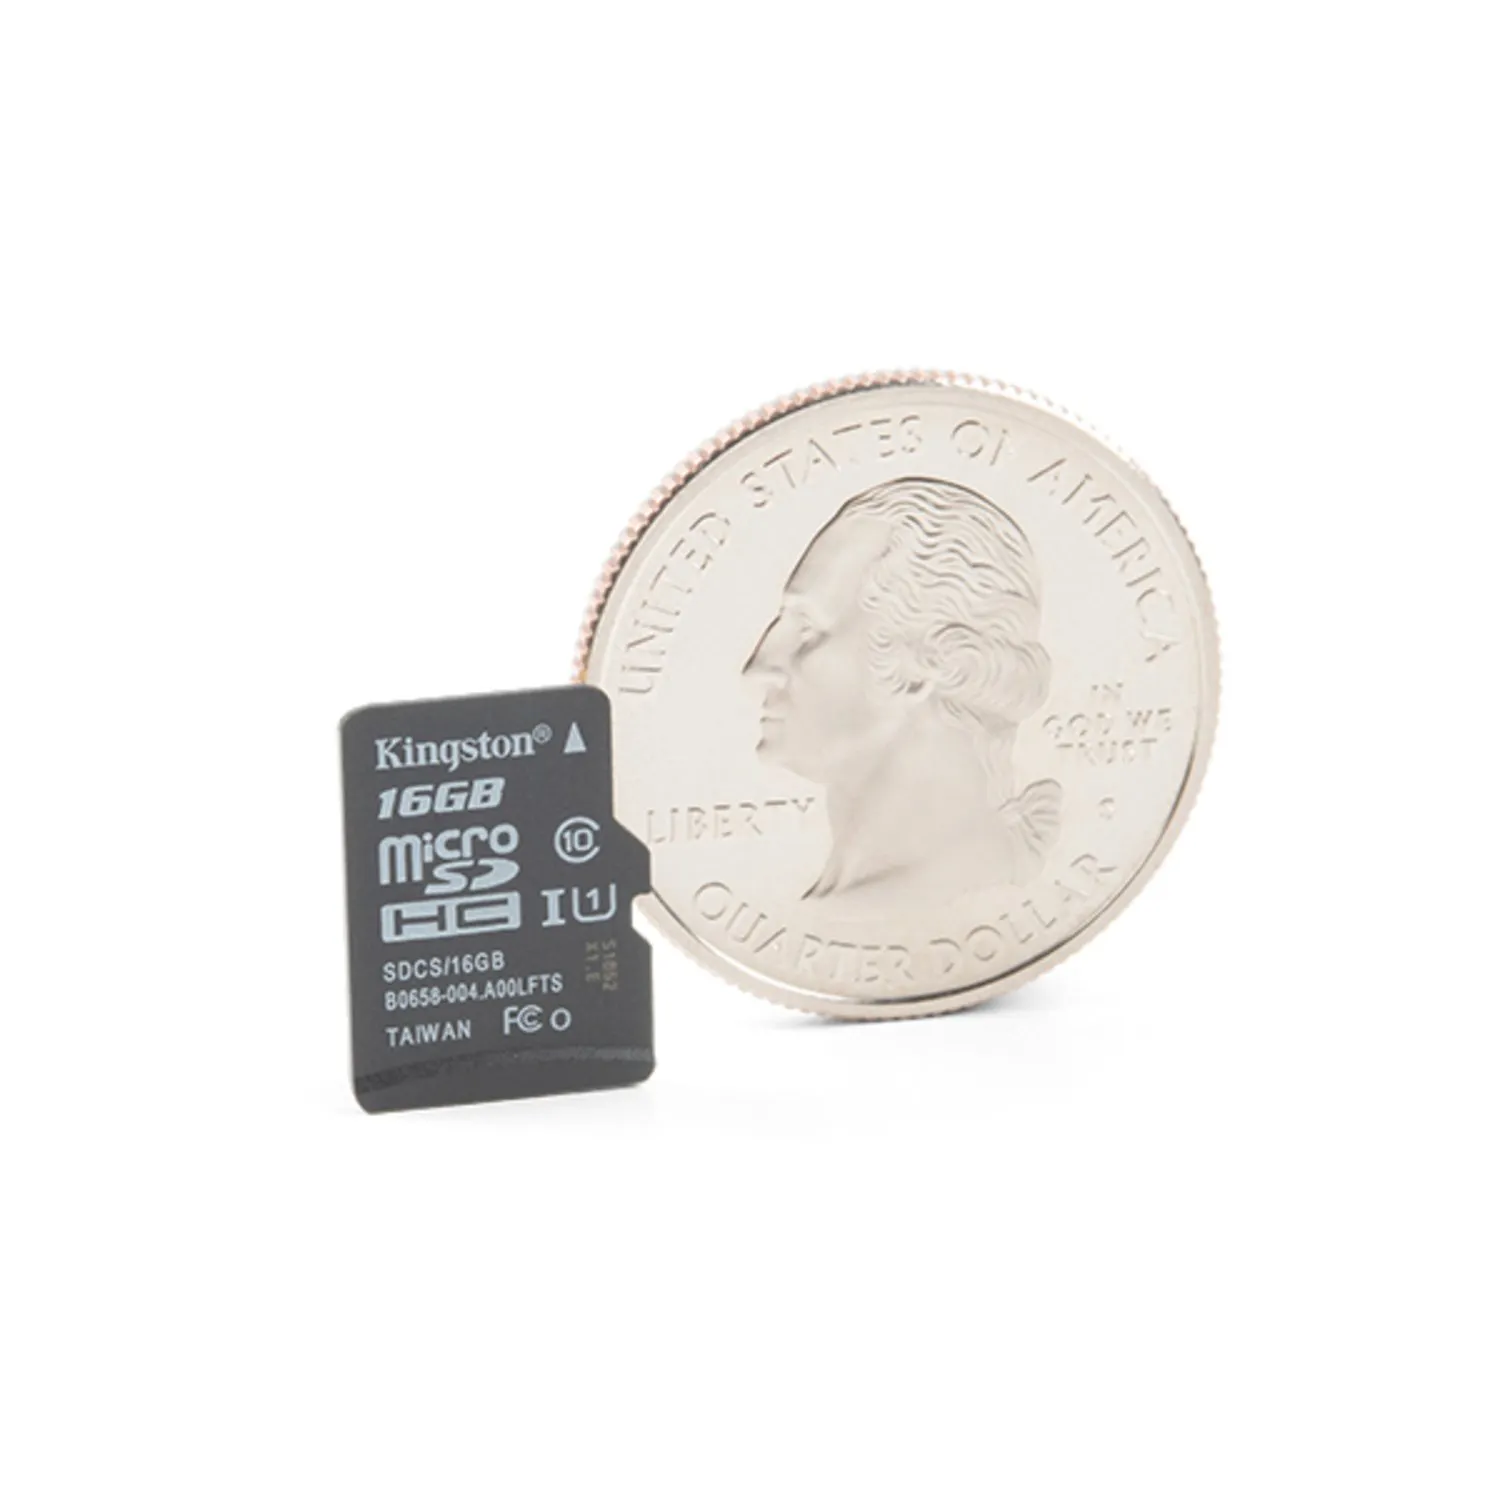 Photo of microSD Card - 16GB (Class 10)